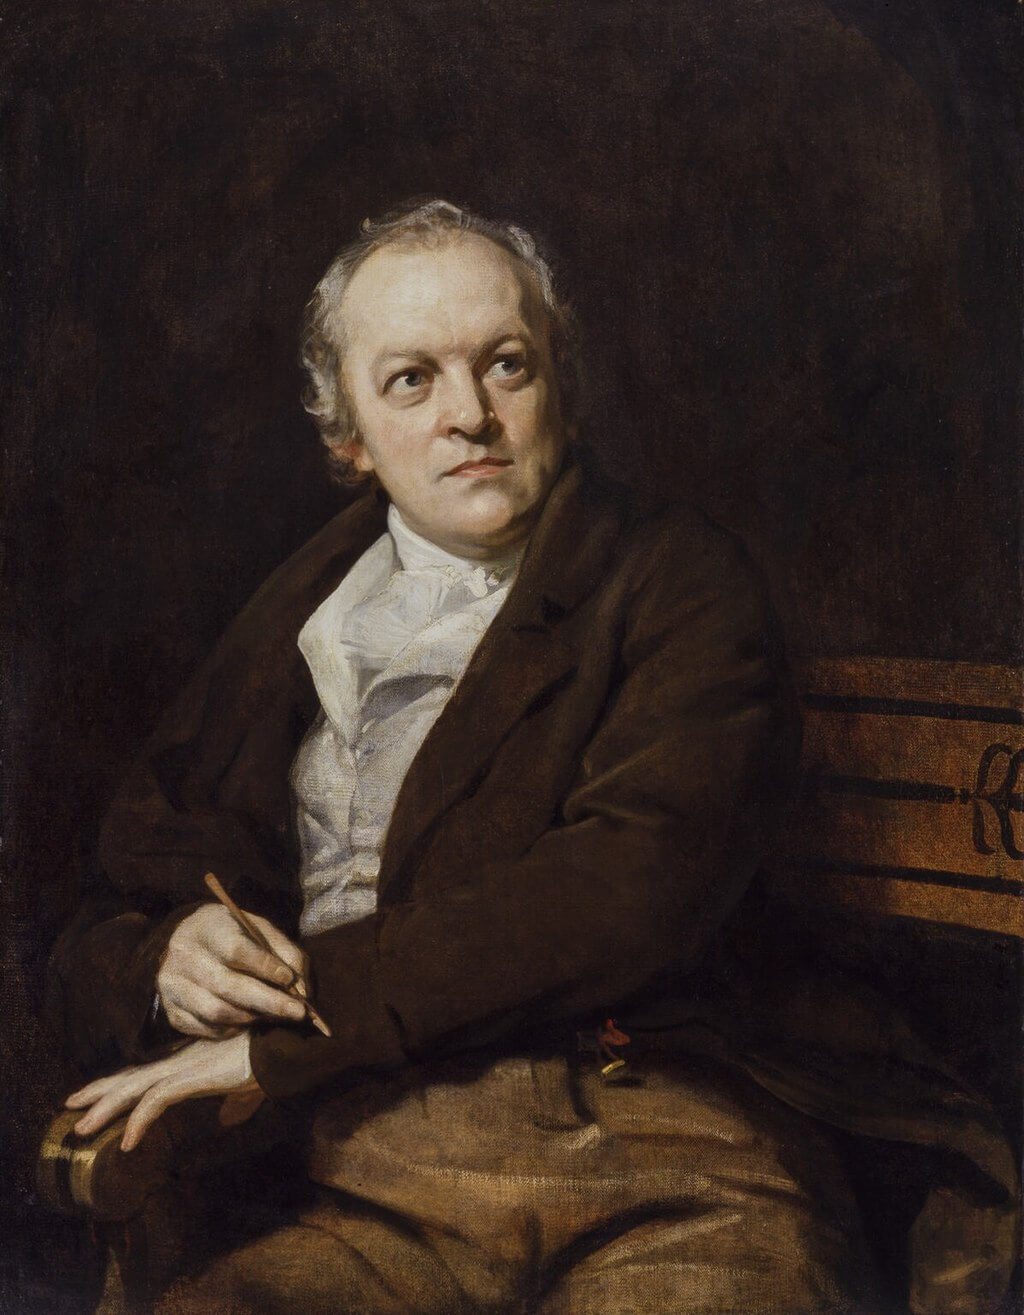 William Blake portrait